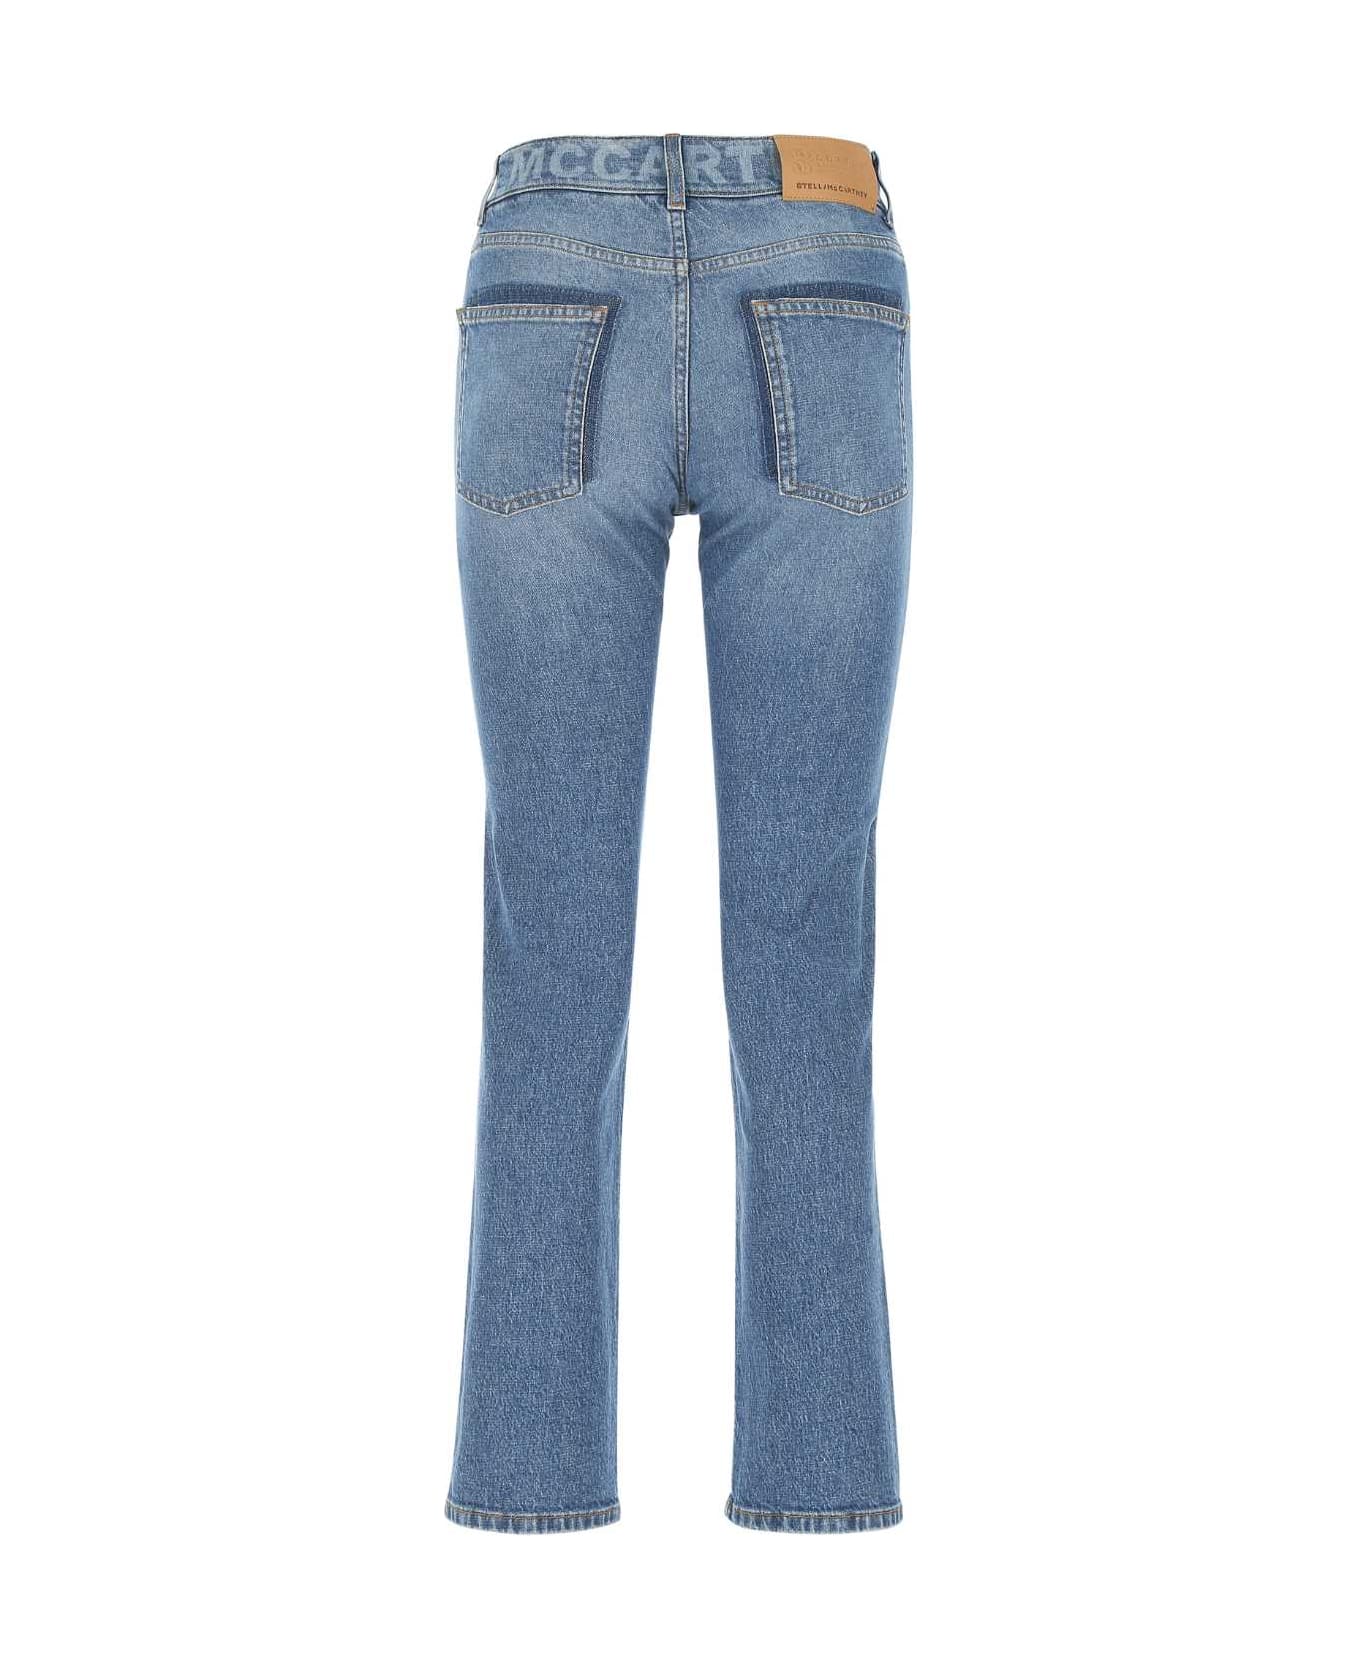 Stella McCartney Stretch Denim Jeans - 4402